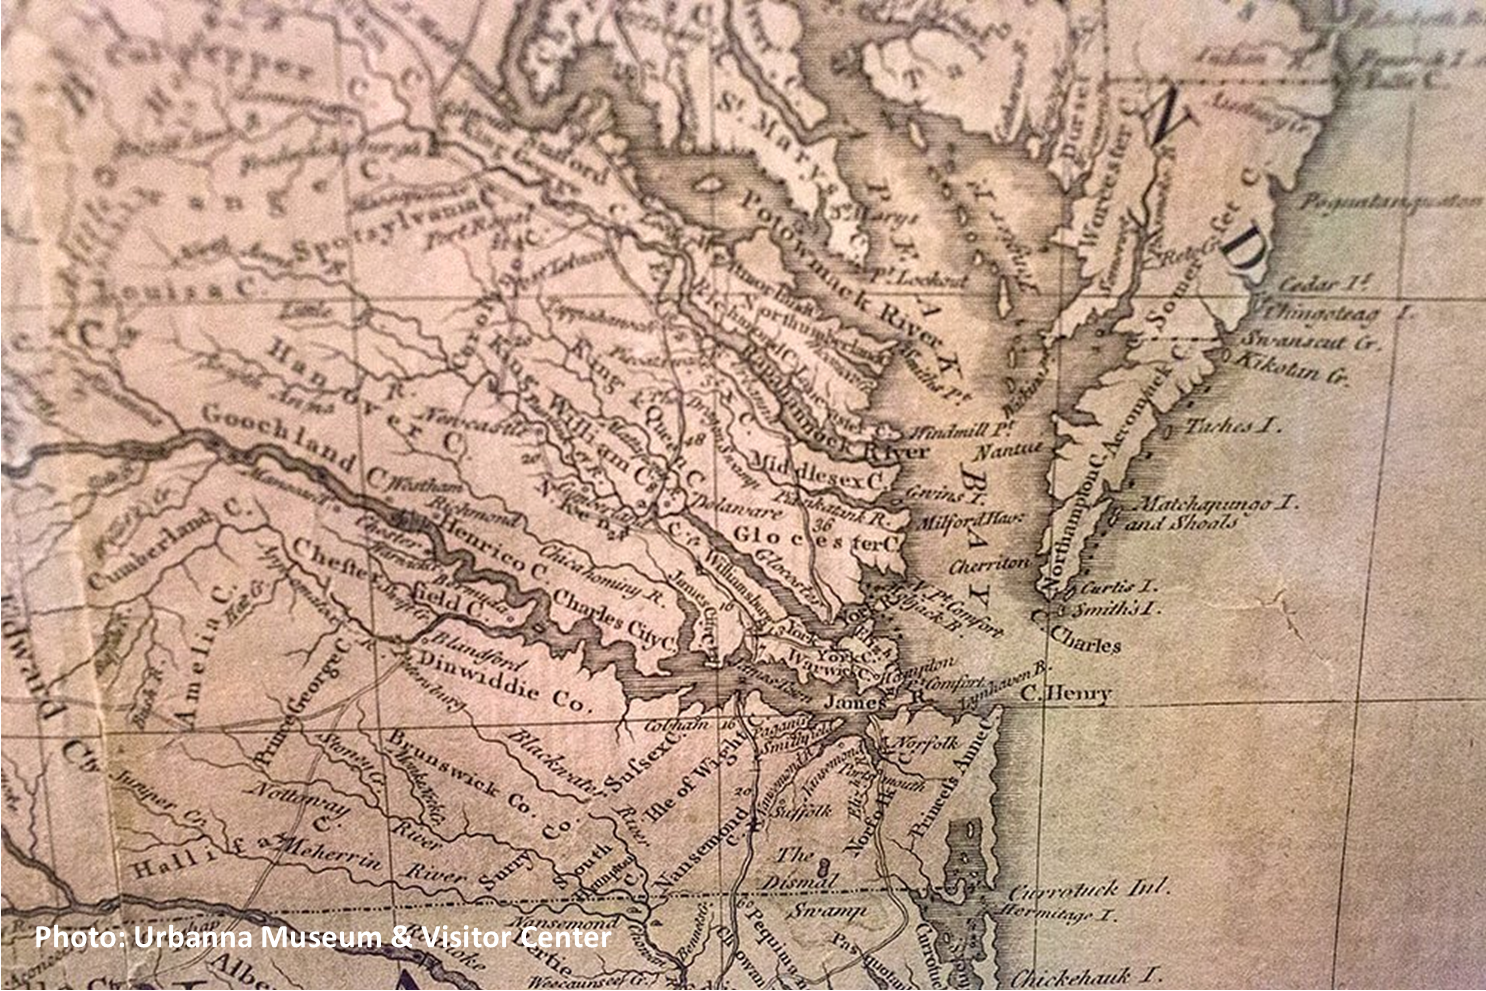 historic hand-drawn map of coastal Virginia